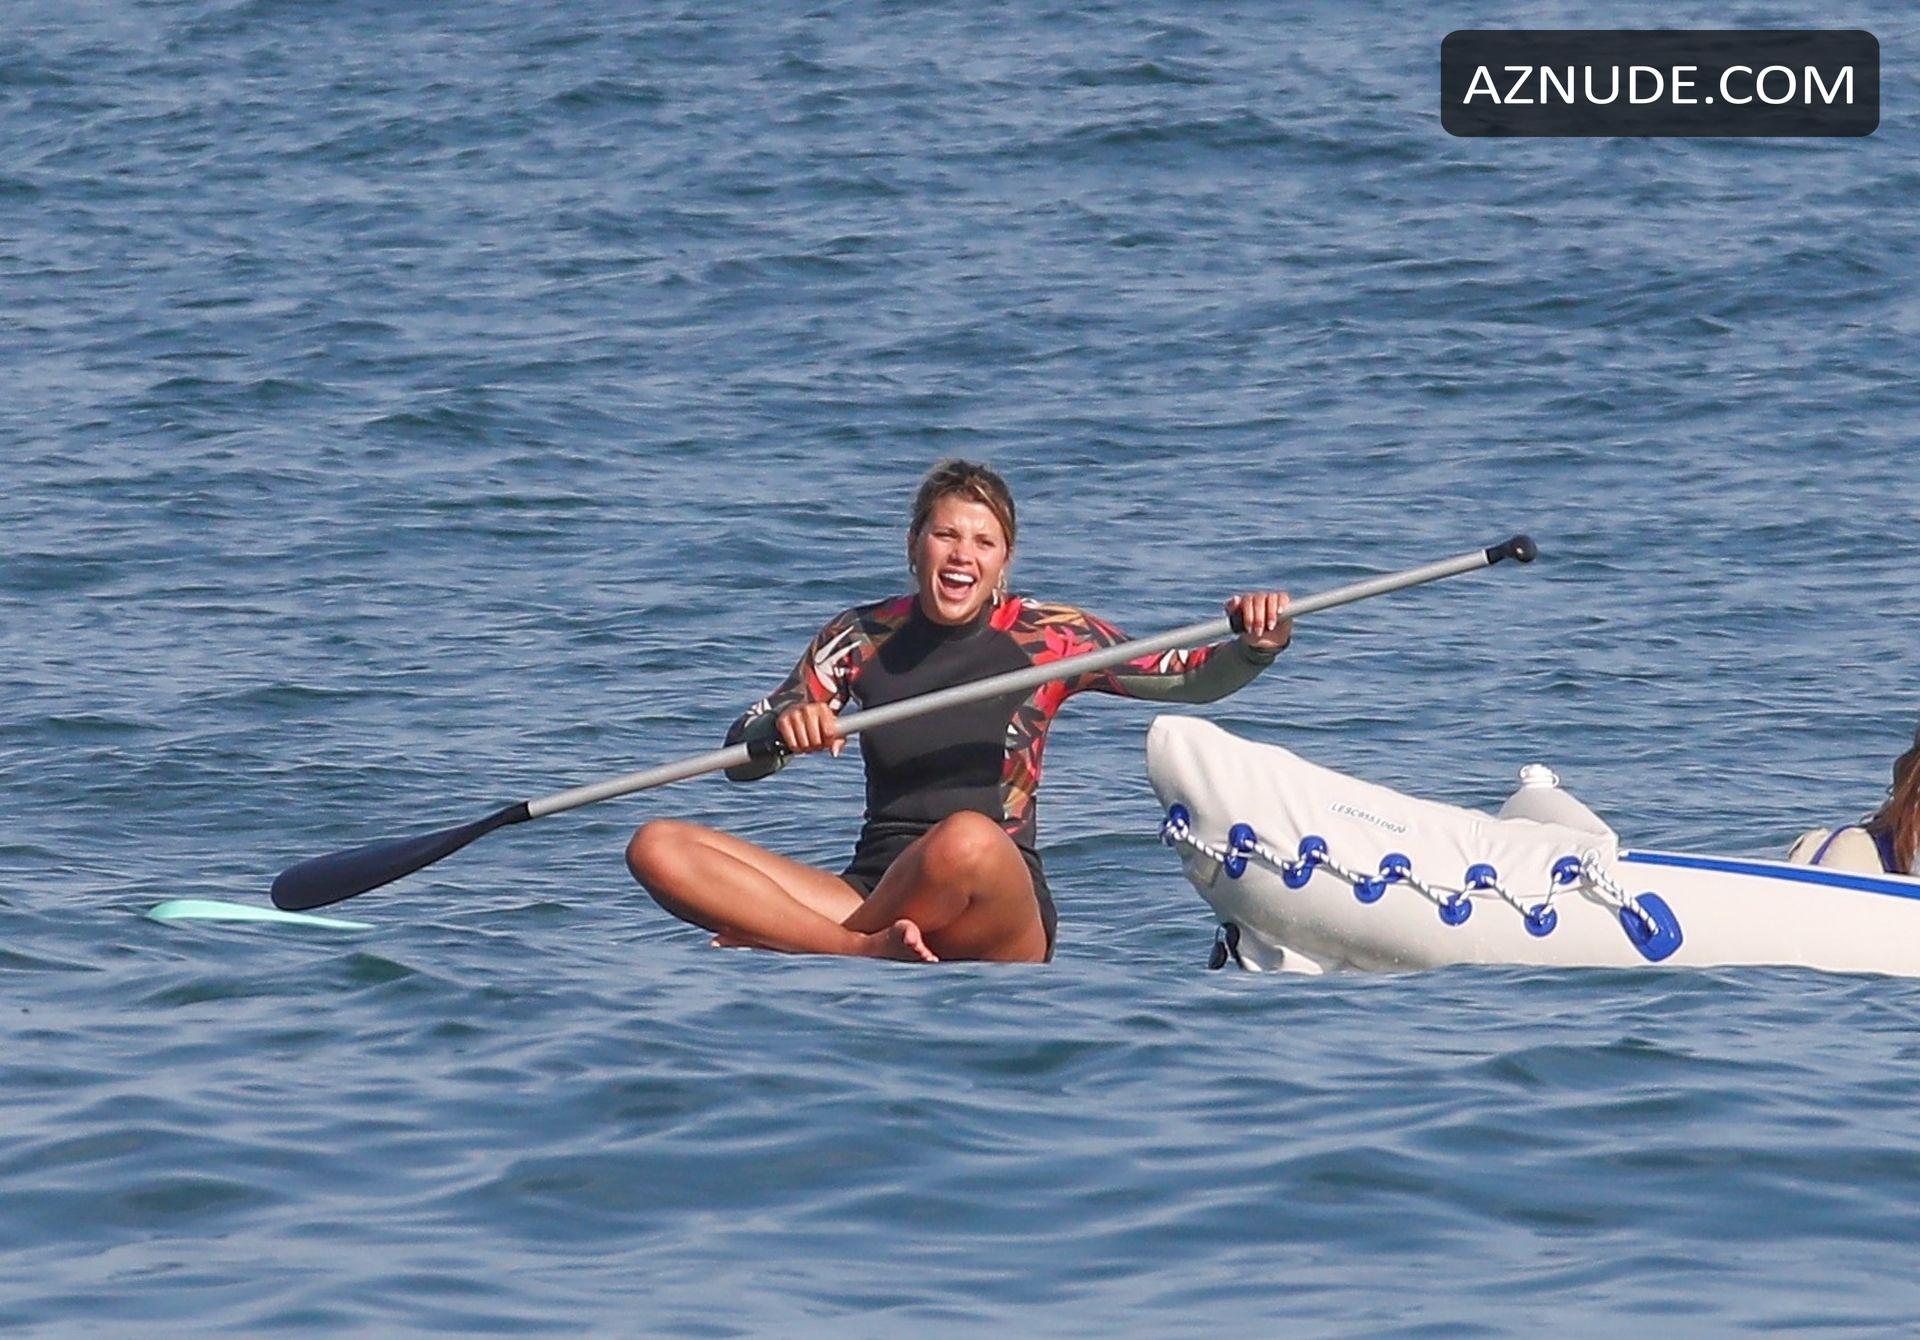 Sofia Richie Paddle Boarding With Friends Off The Coast Of Malibu Aznude